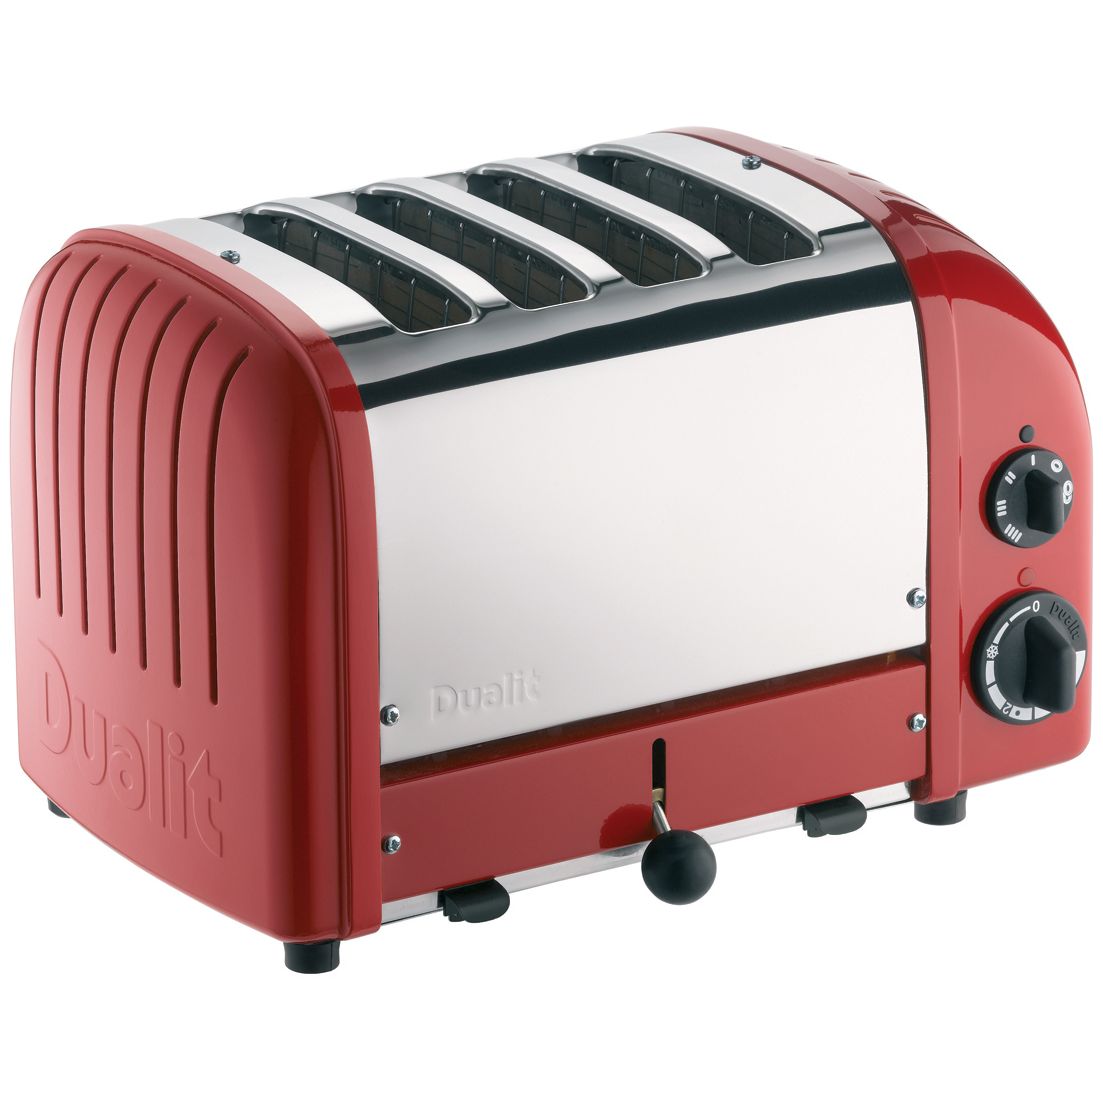 Dualit NewGen Toaster, 4-Slice, Red at John Lewis